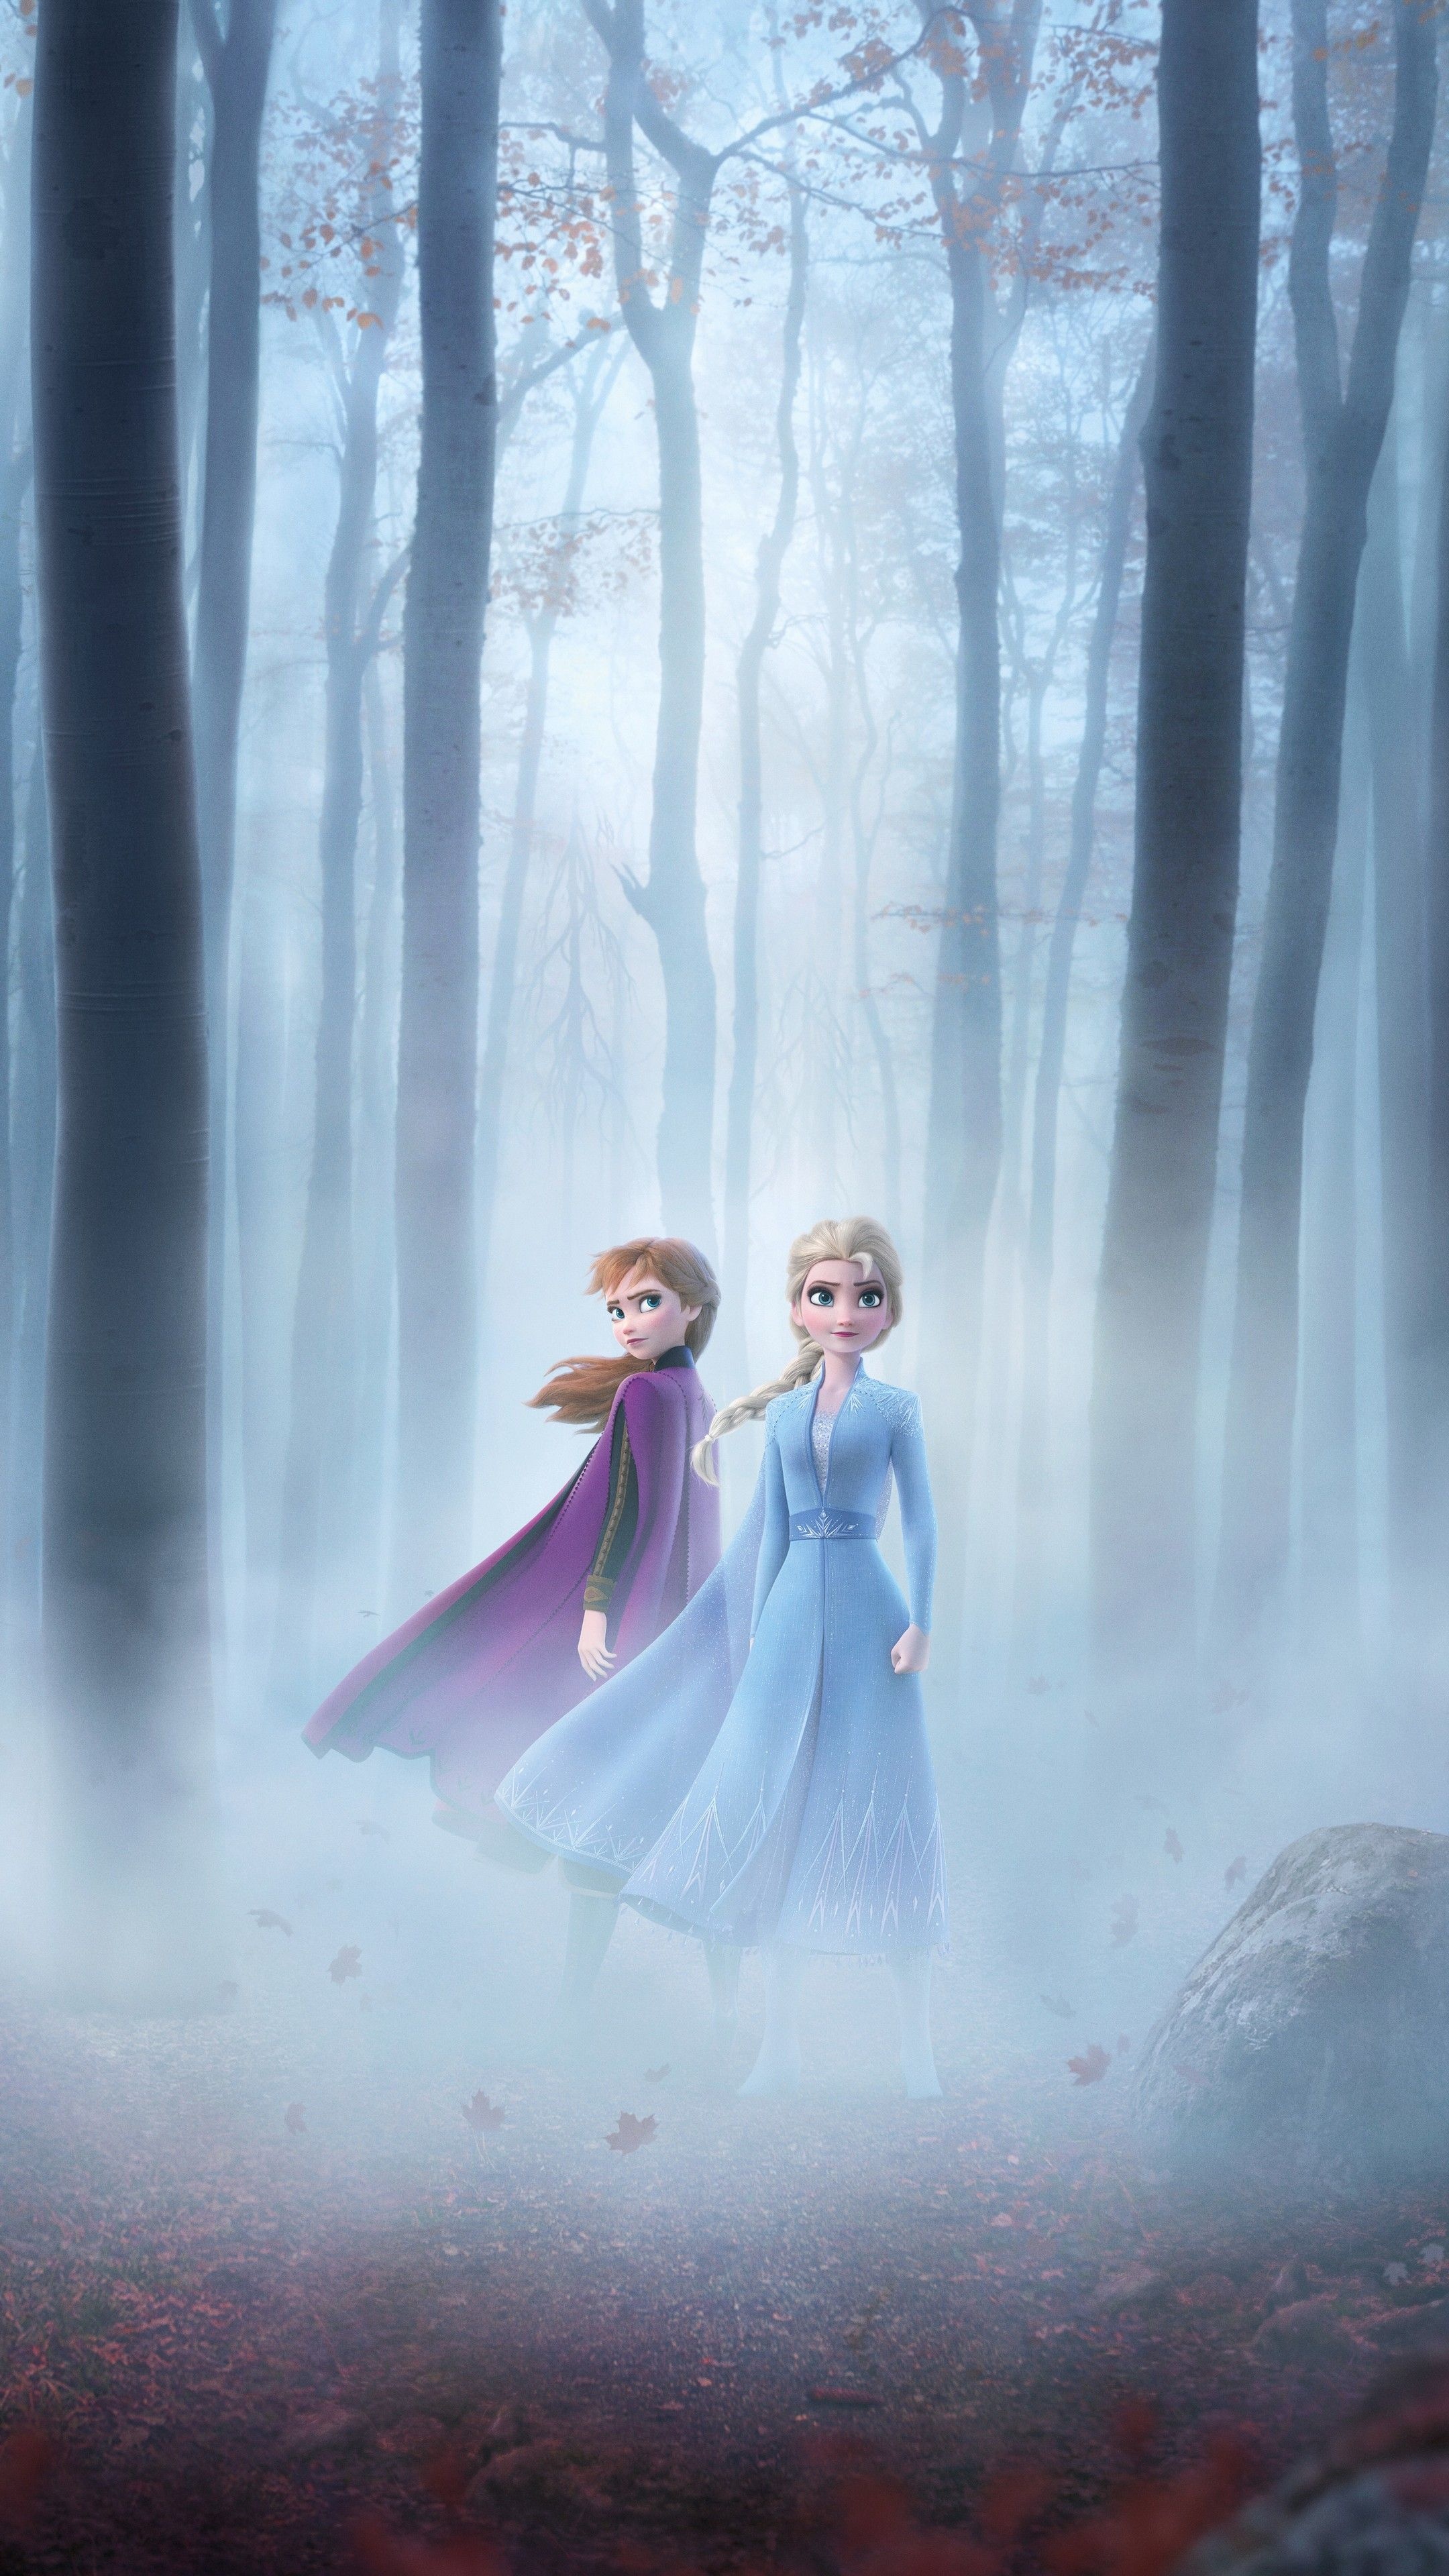 Disney Animation, Frozen 2 wallpaper, High-resolution image, Disney princess, 2160x3840 4K Handy